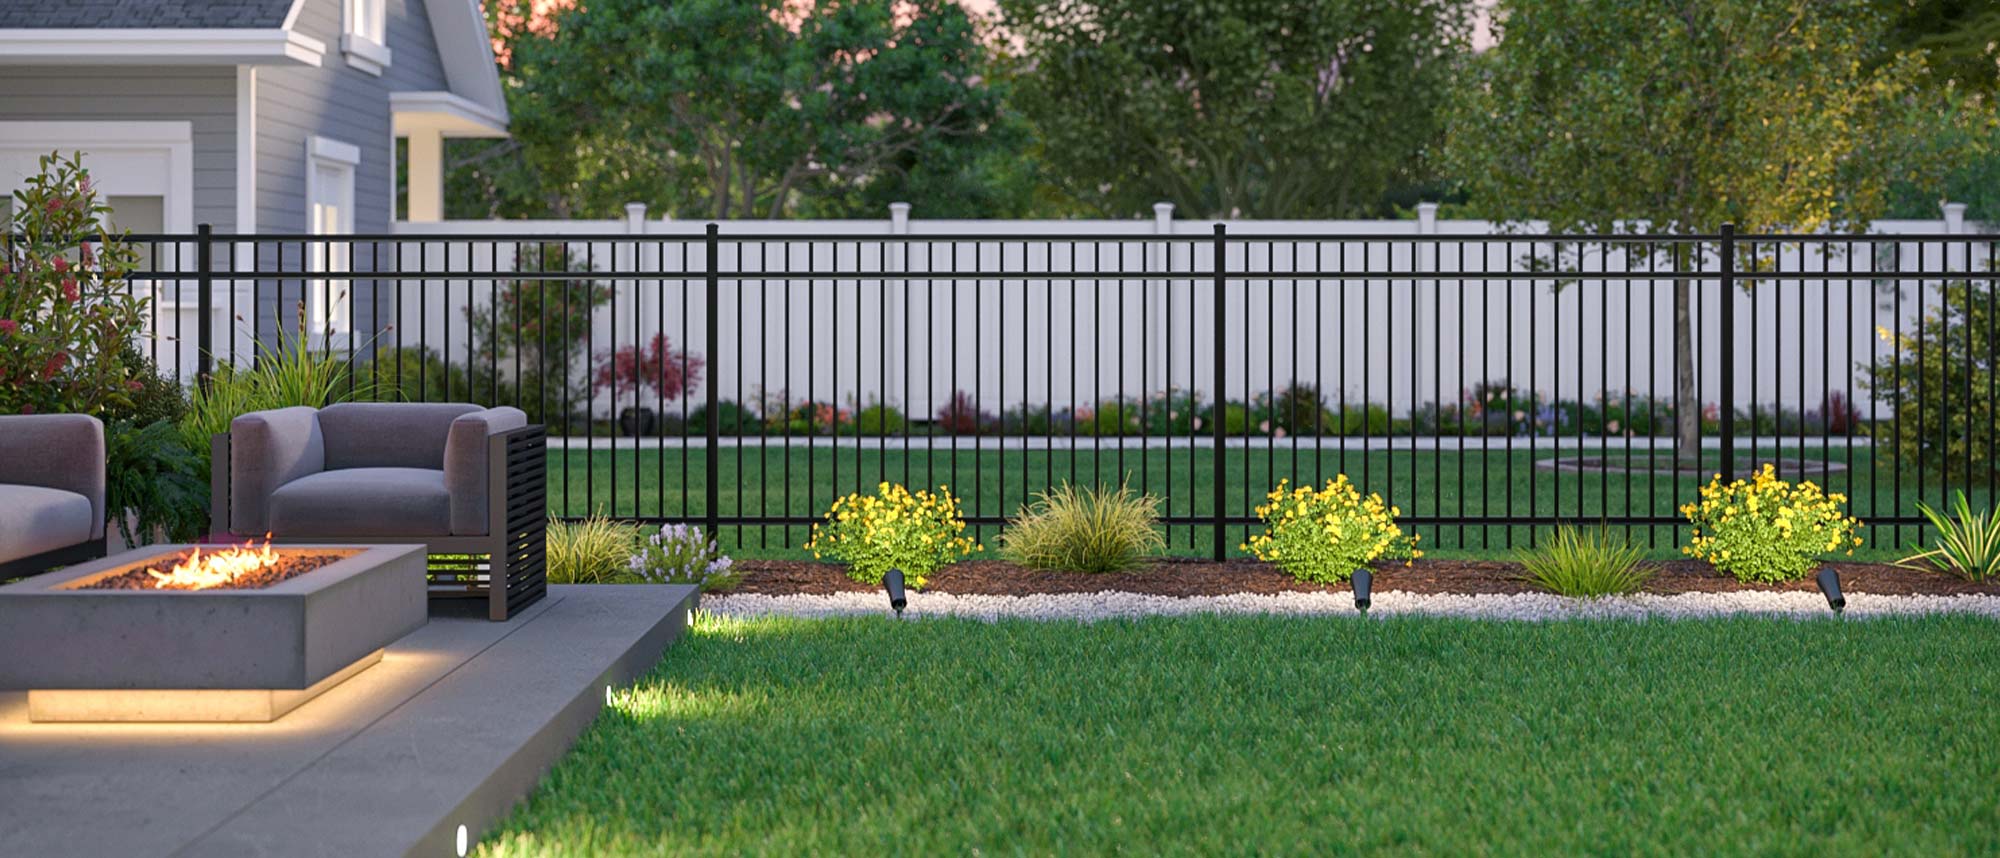 Evansville Indiana Aluminum Fence - Granite Style